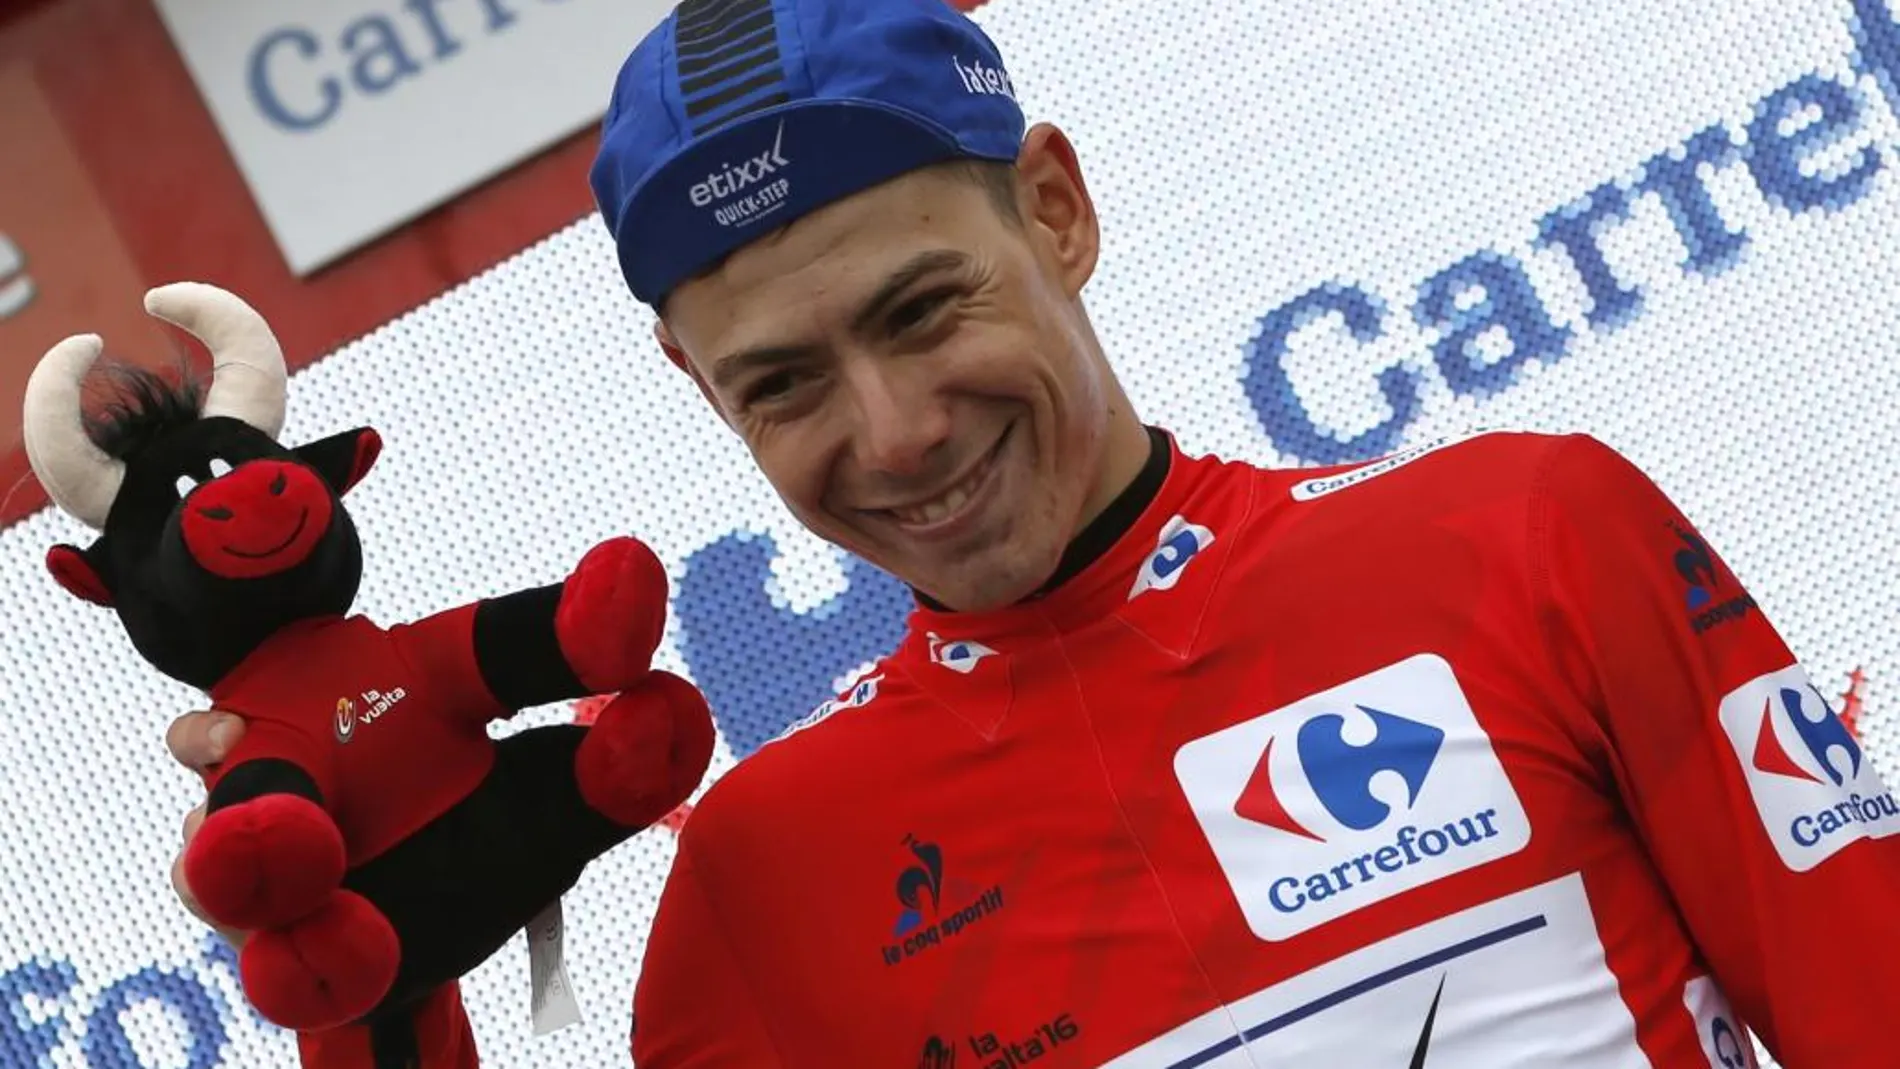 David de la Cruz (Etixx) en el podium tras ganar la novena etapa de la Vuelta a España